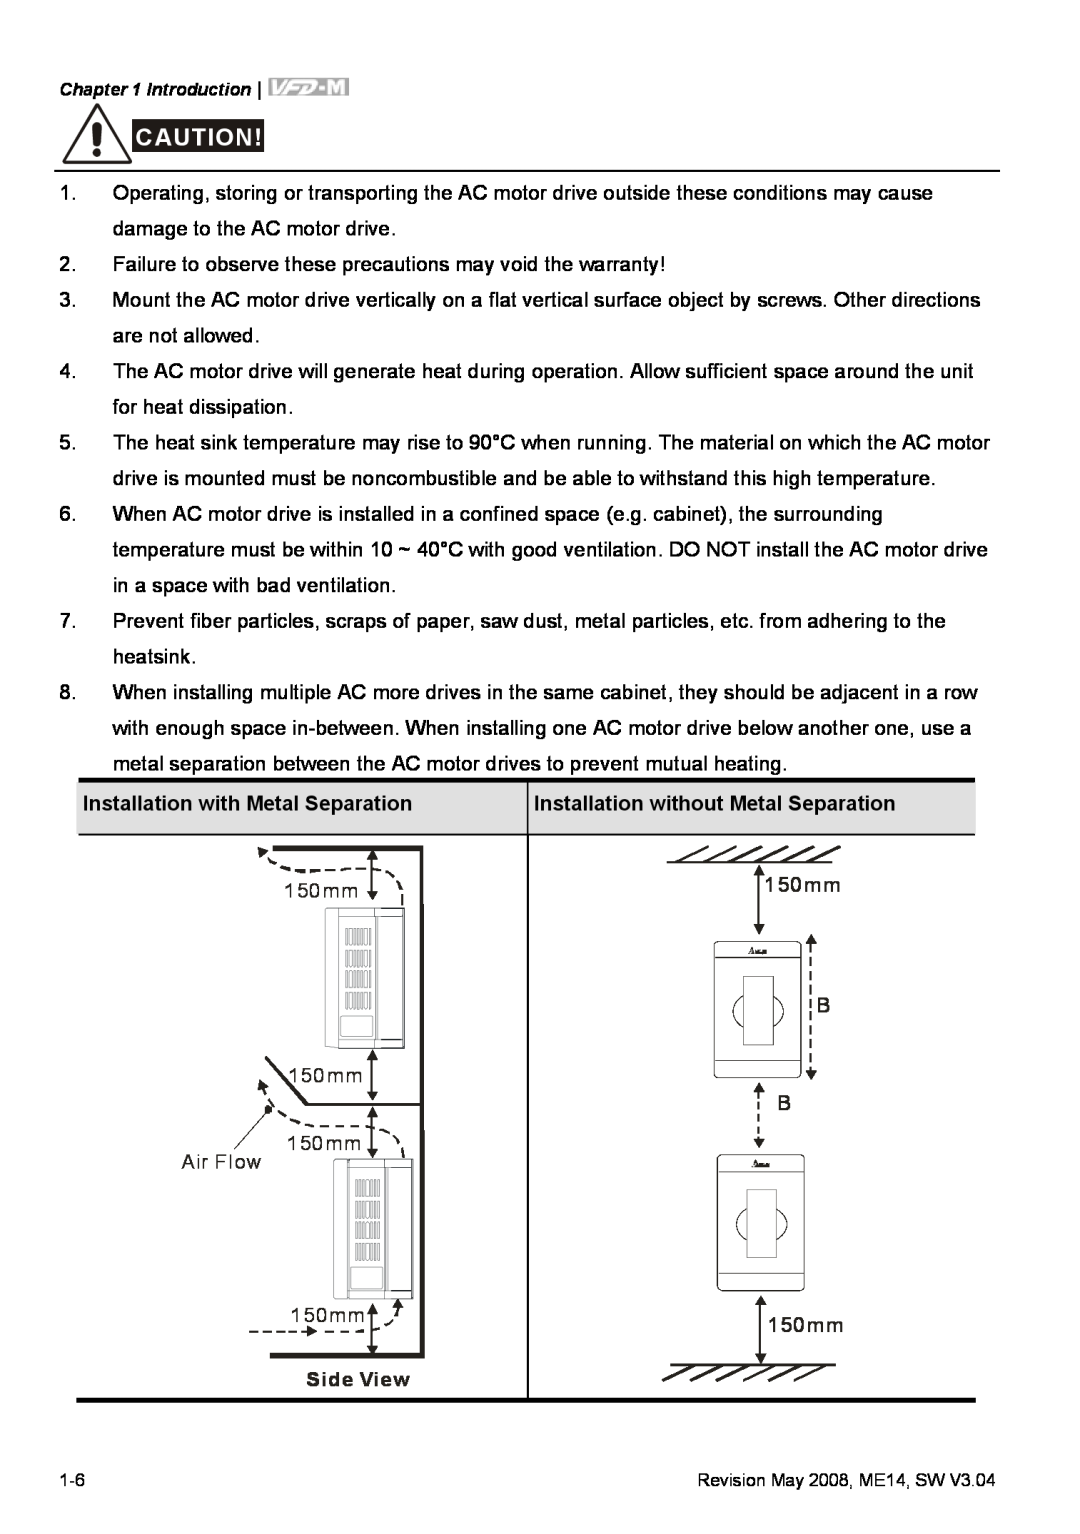 Delta Electronics VFD-M manual 150mm, Air Flow, B 1 50 mm B 1 50 mm, Side View 